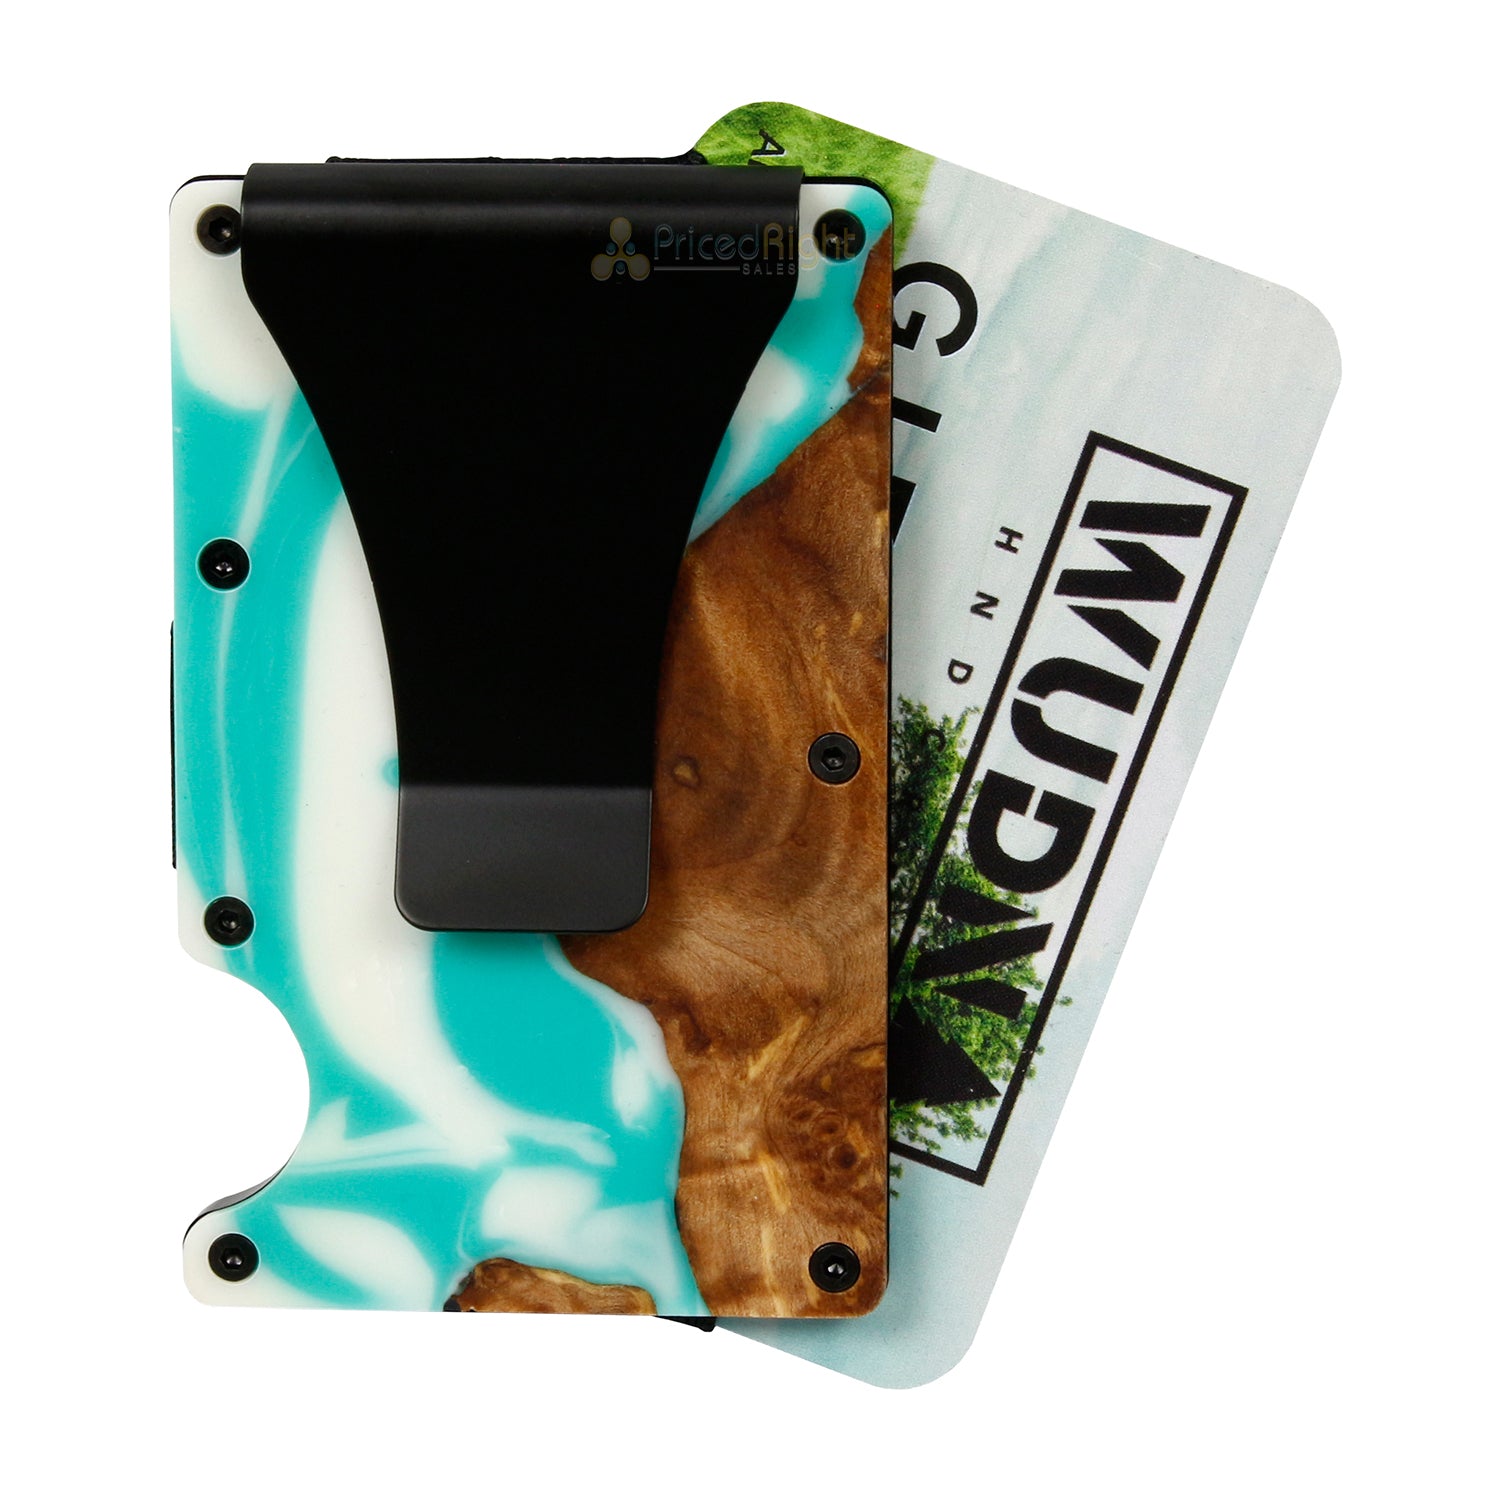 WUDN Adventure Handcrafted Wallet Resin & Wood RFID Money Clip Coastal Teal